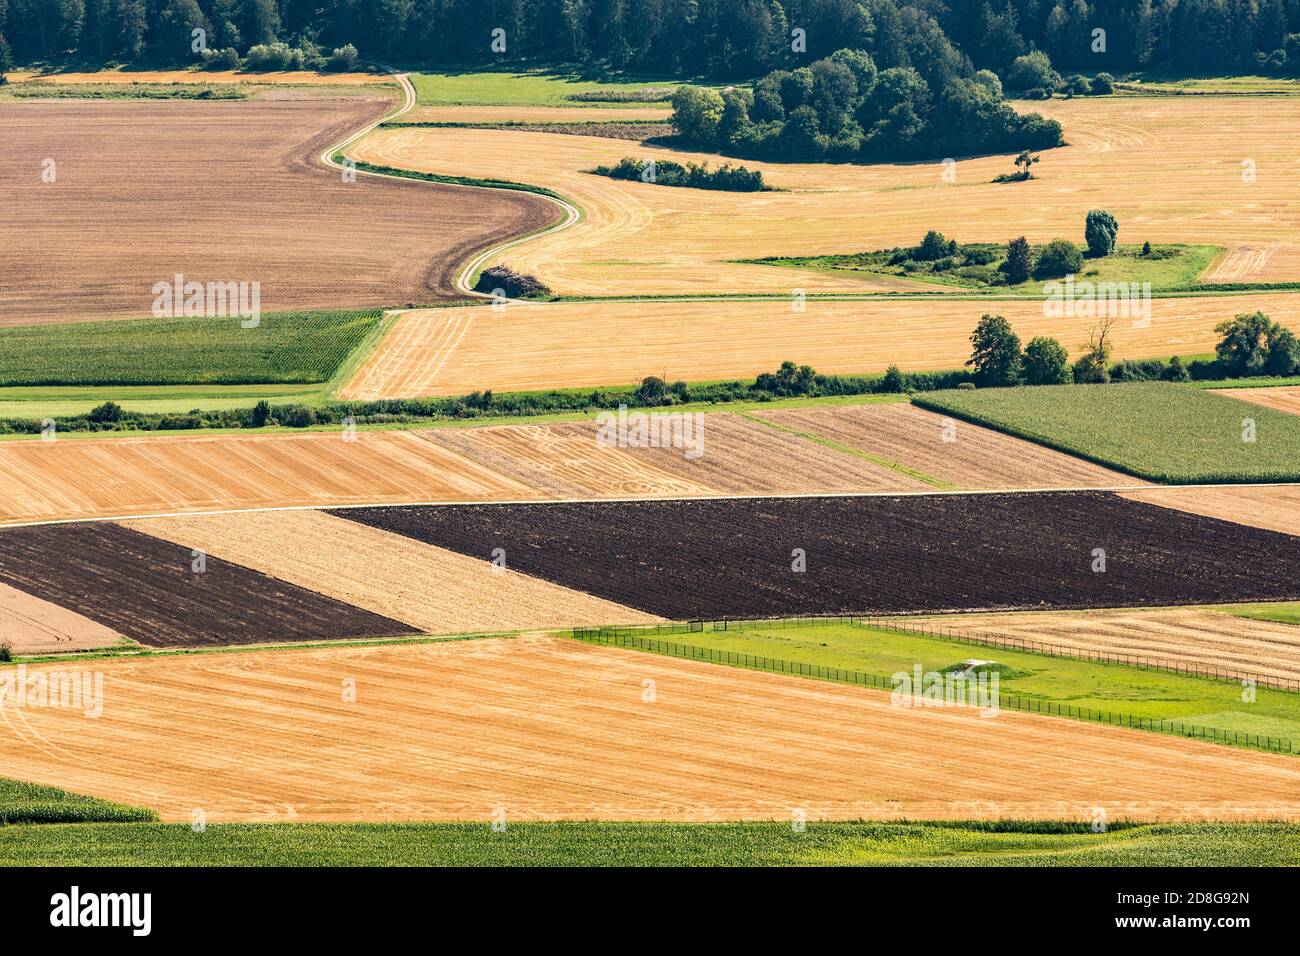 Beilngries, Felder, Landwirtschaft Foto Stock